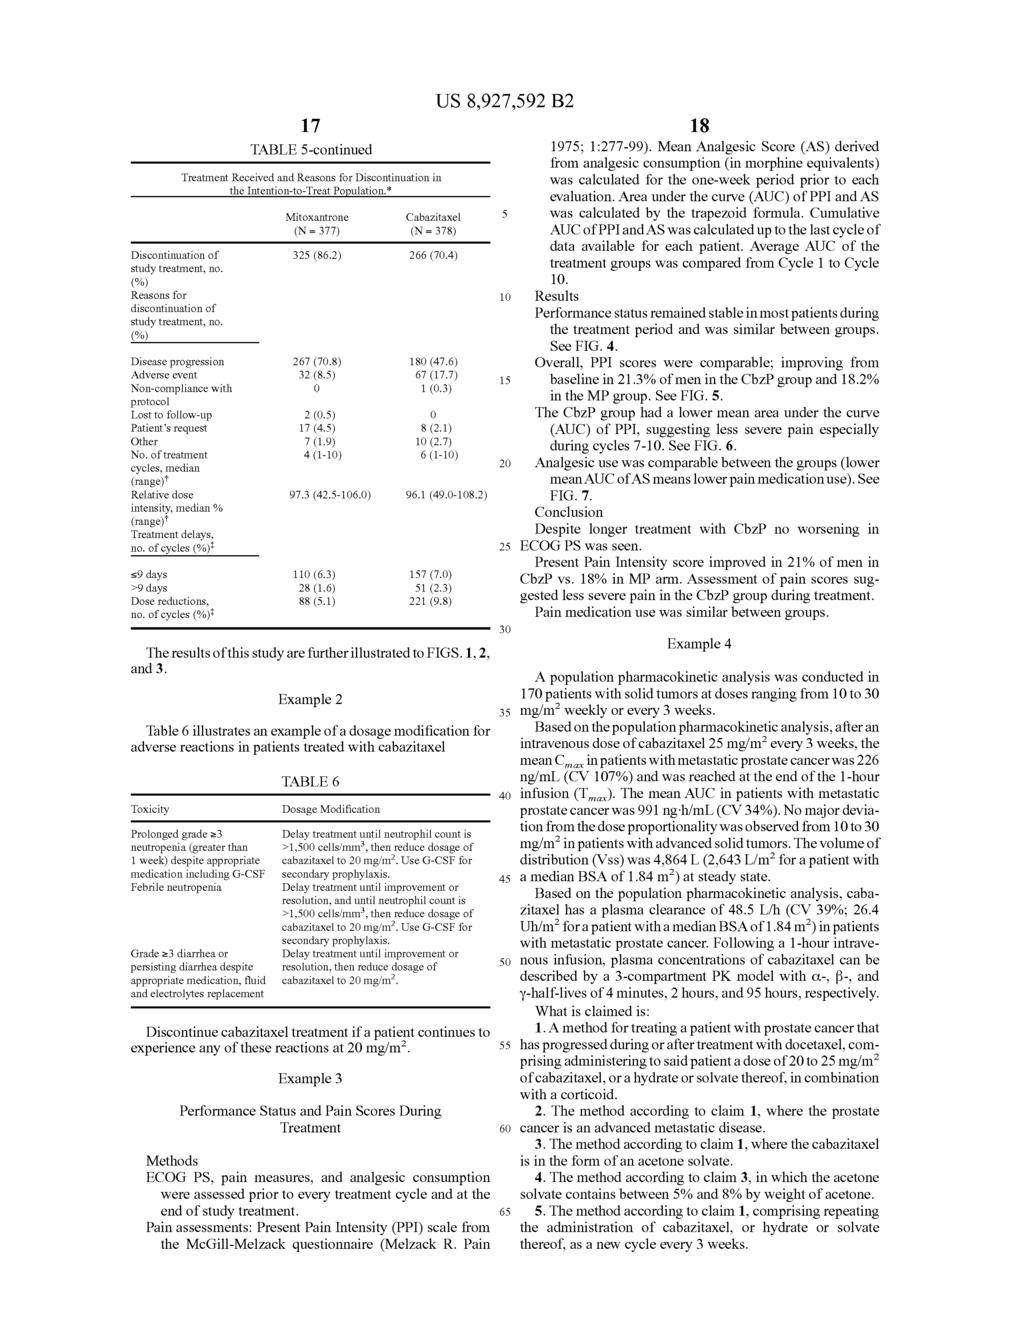 Case 3:15-cv-02520-MAS-LHG Document 1